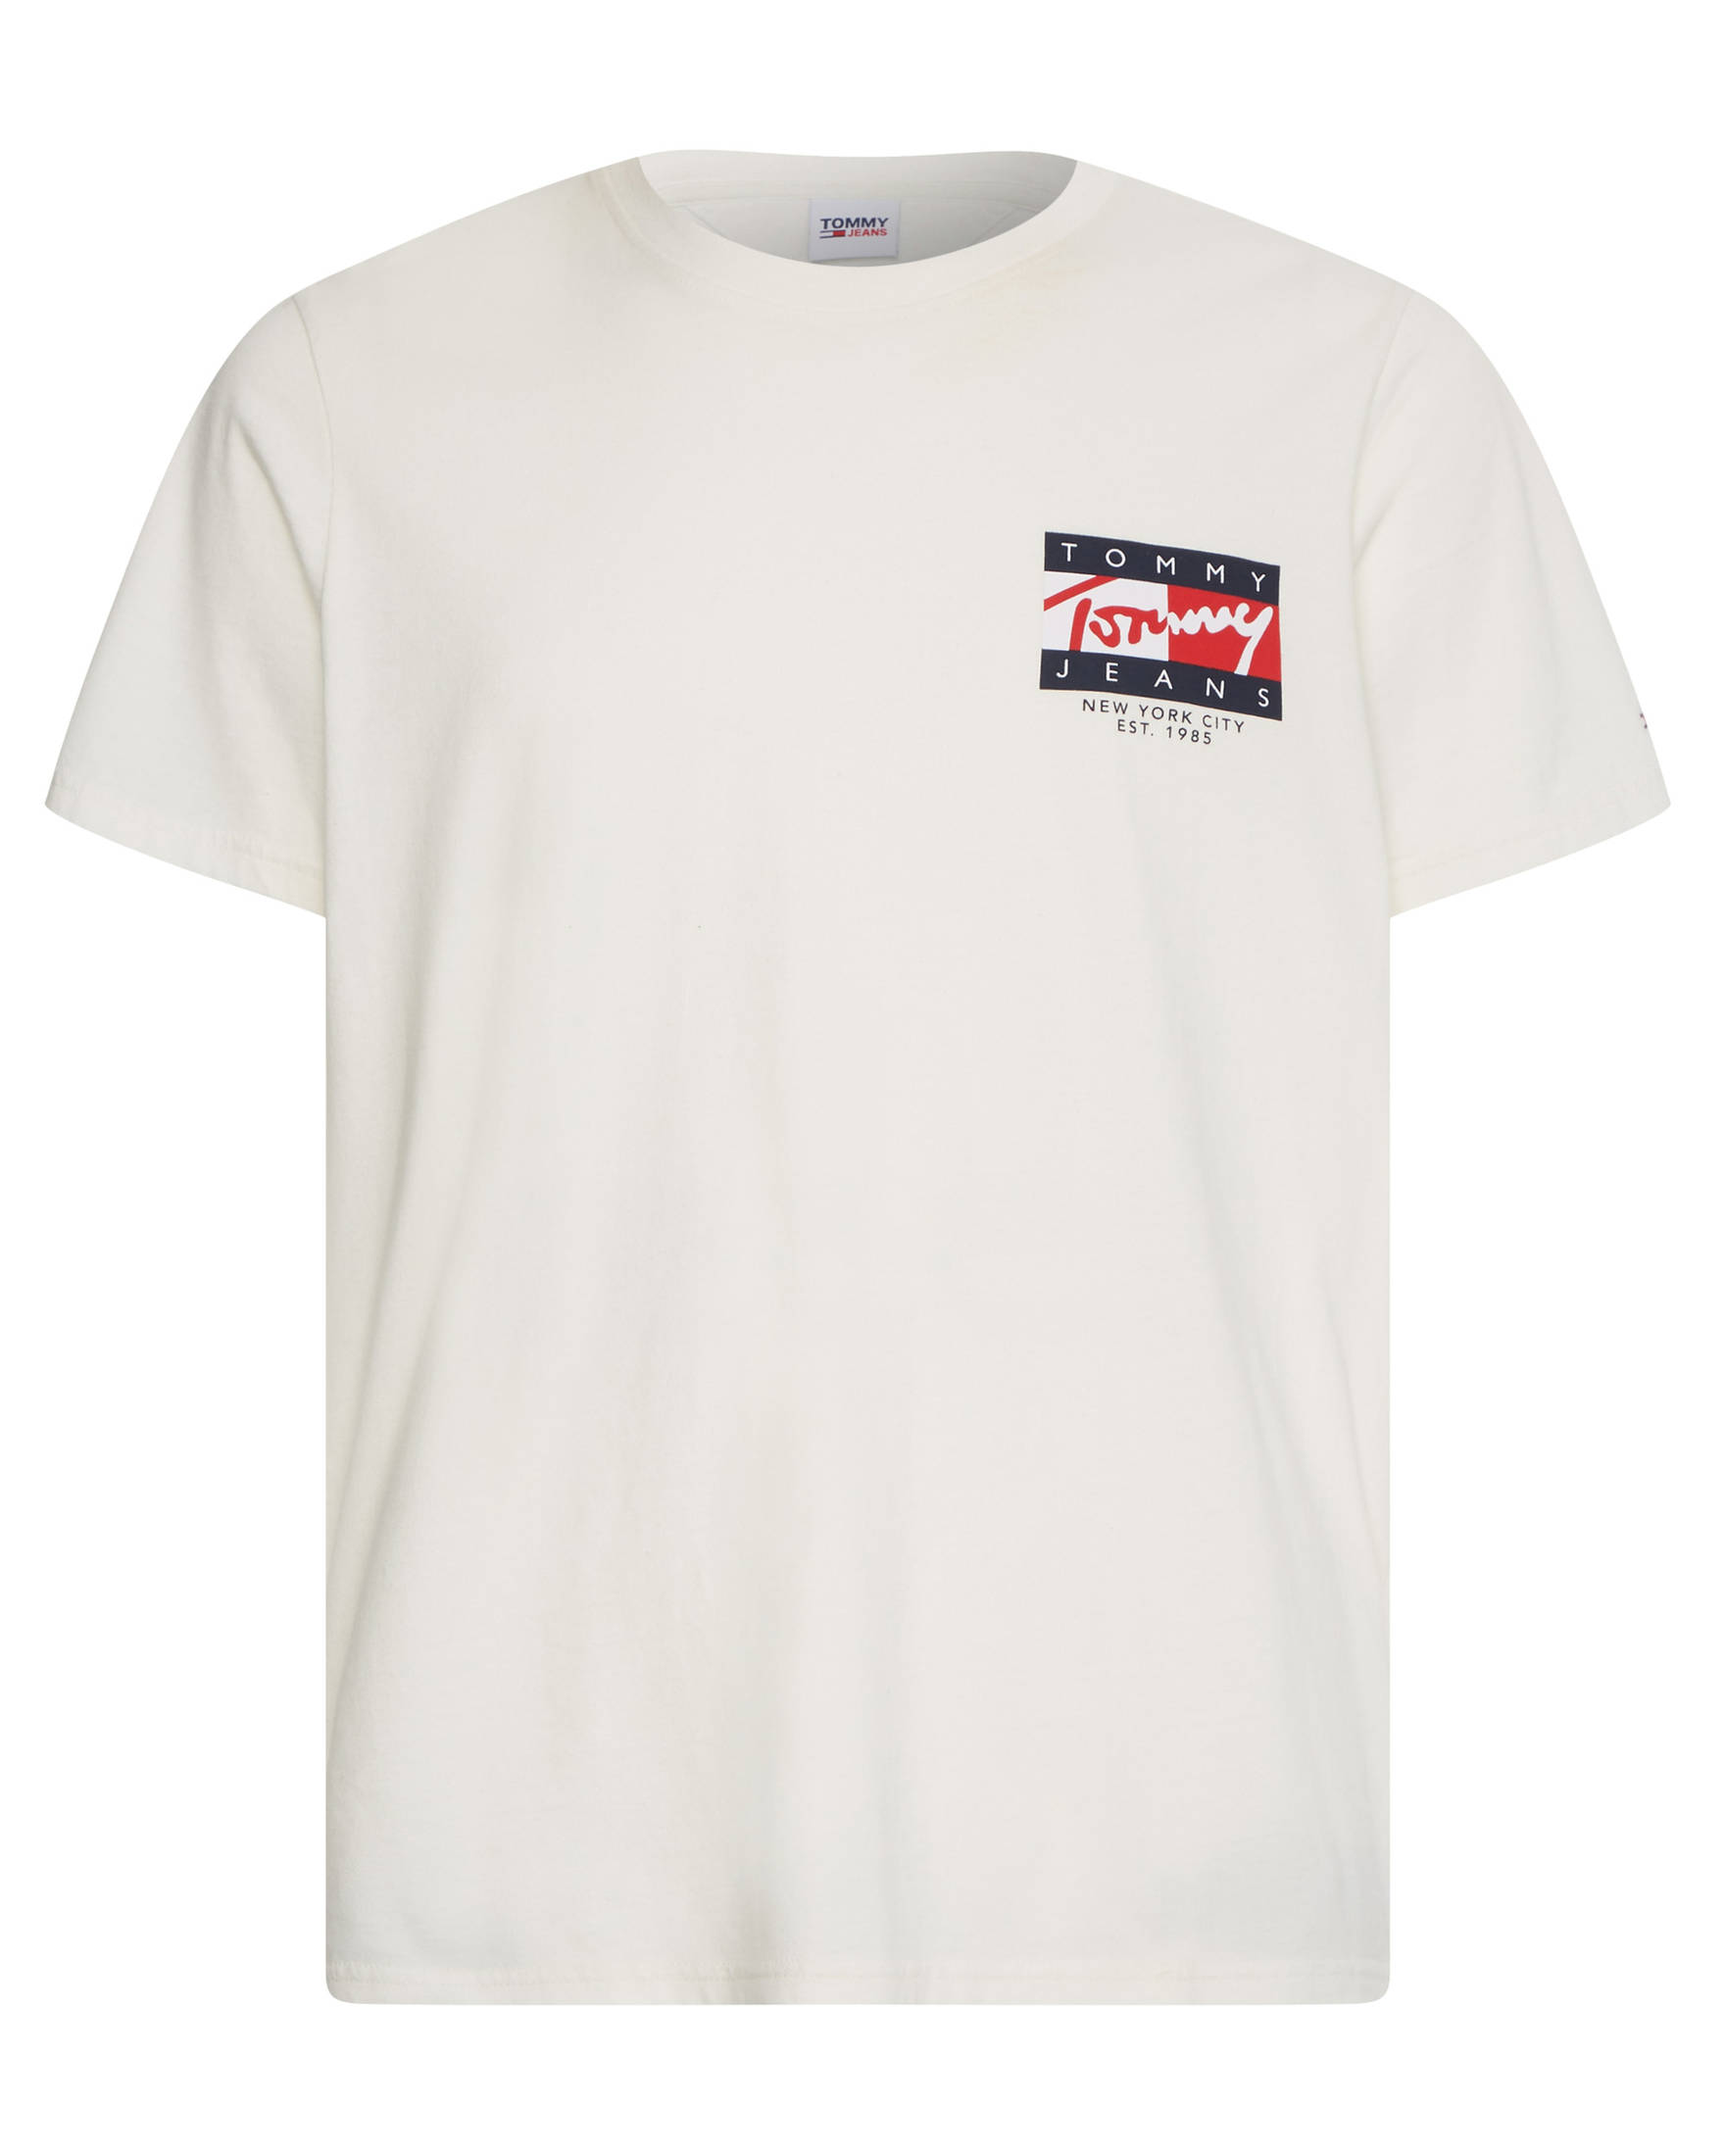 Jeans TEE kaufen Herren T-Shirt | VINTAGE FLAG Tommy engelhorn SIGNATURE